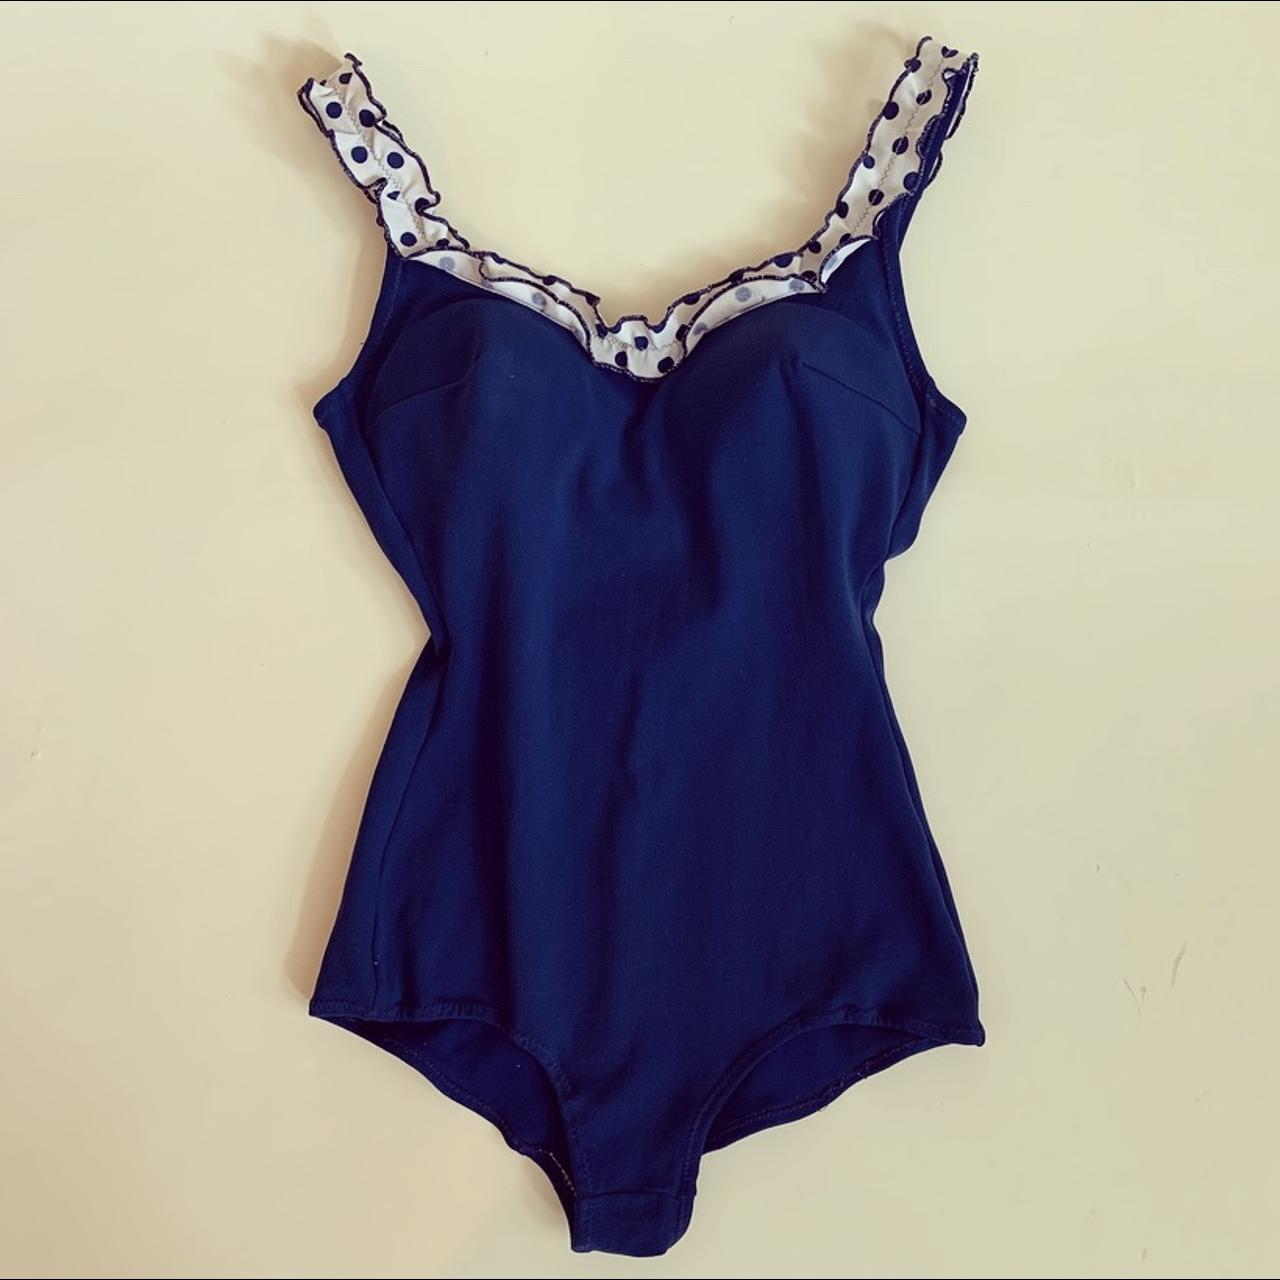 🌊 Incredible rare 50’s vintage swimsuit!! 🌊 🌊... - Depop